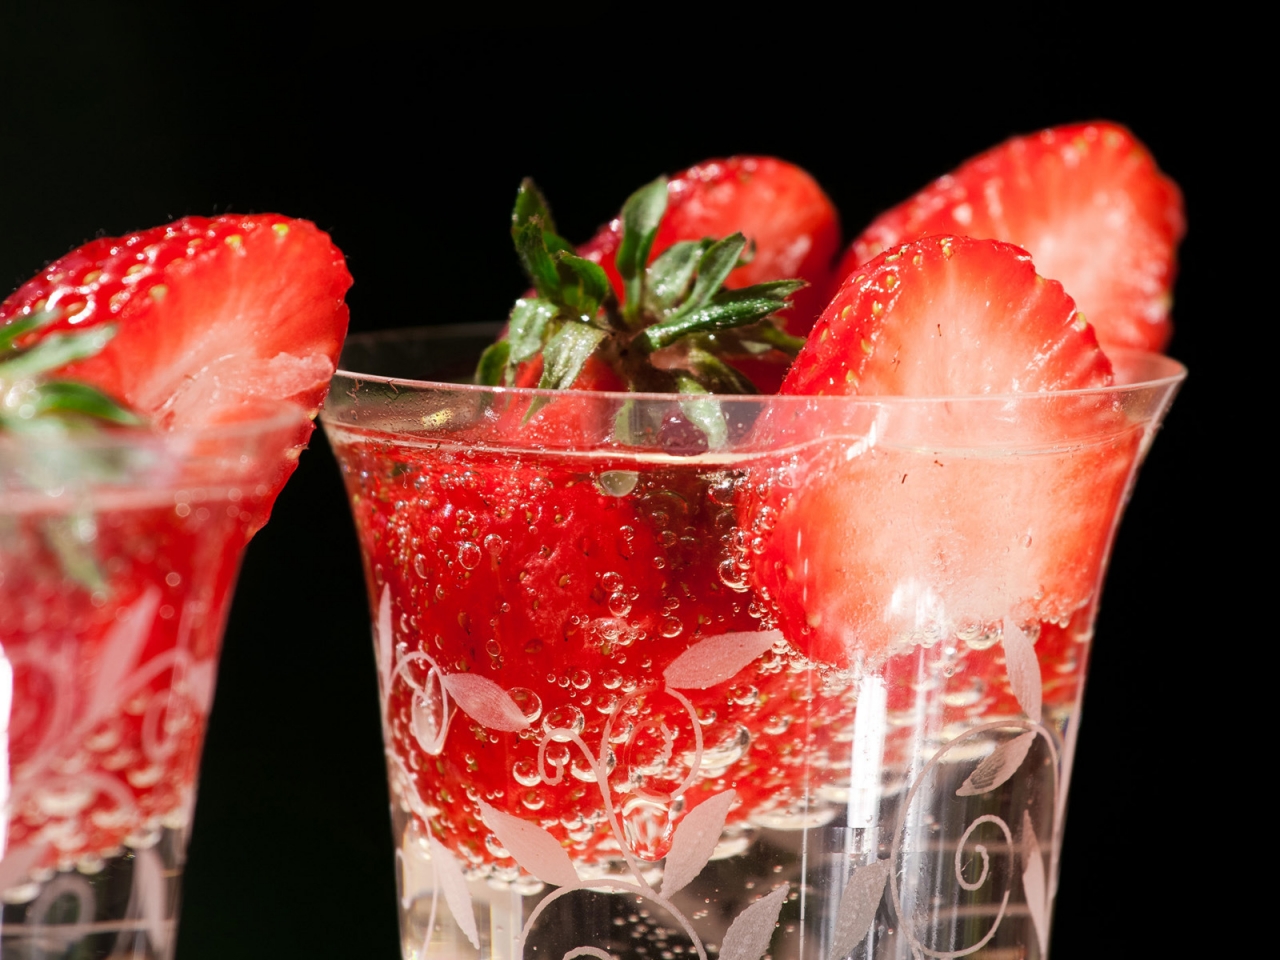 Fresh strawberries in glasses for 1280 x 960 resolution